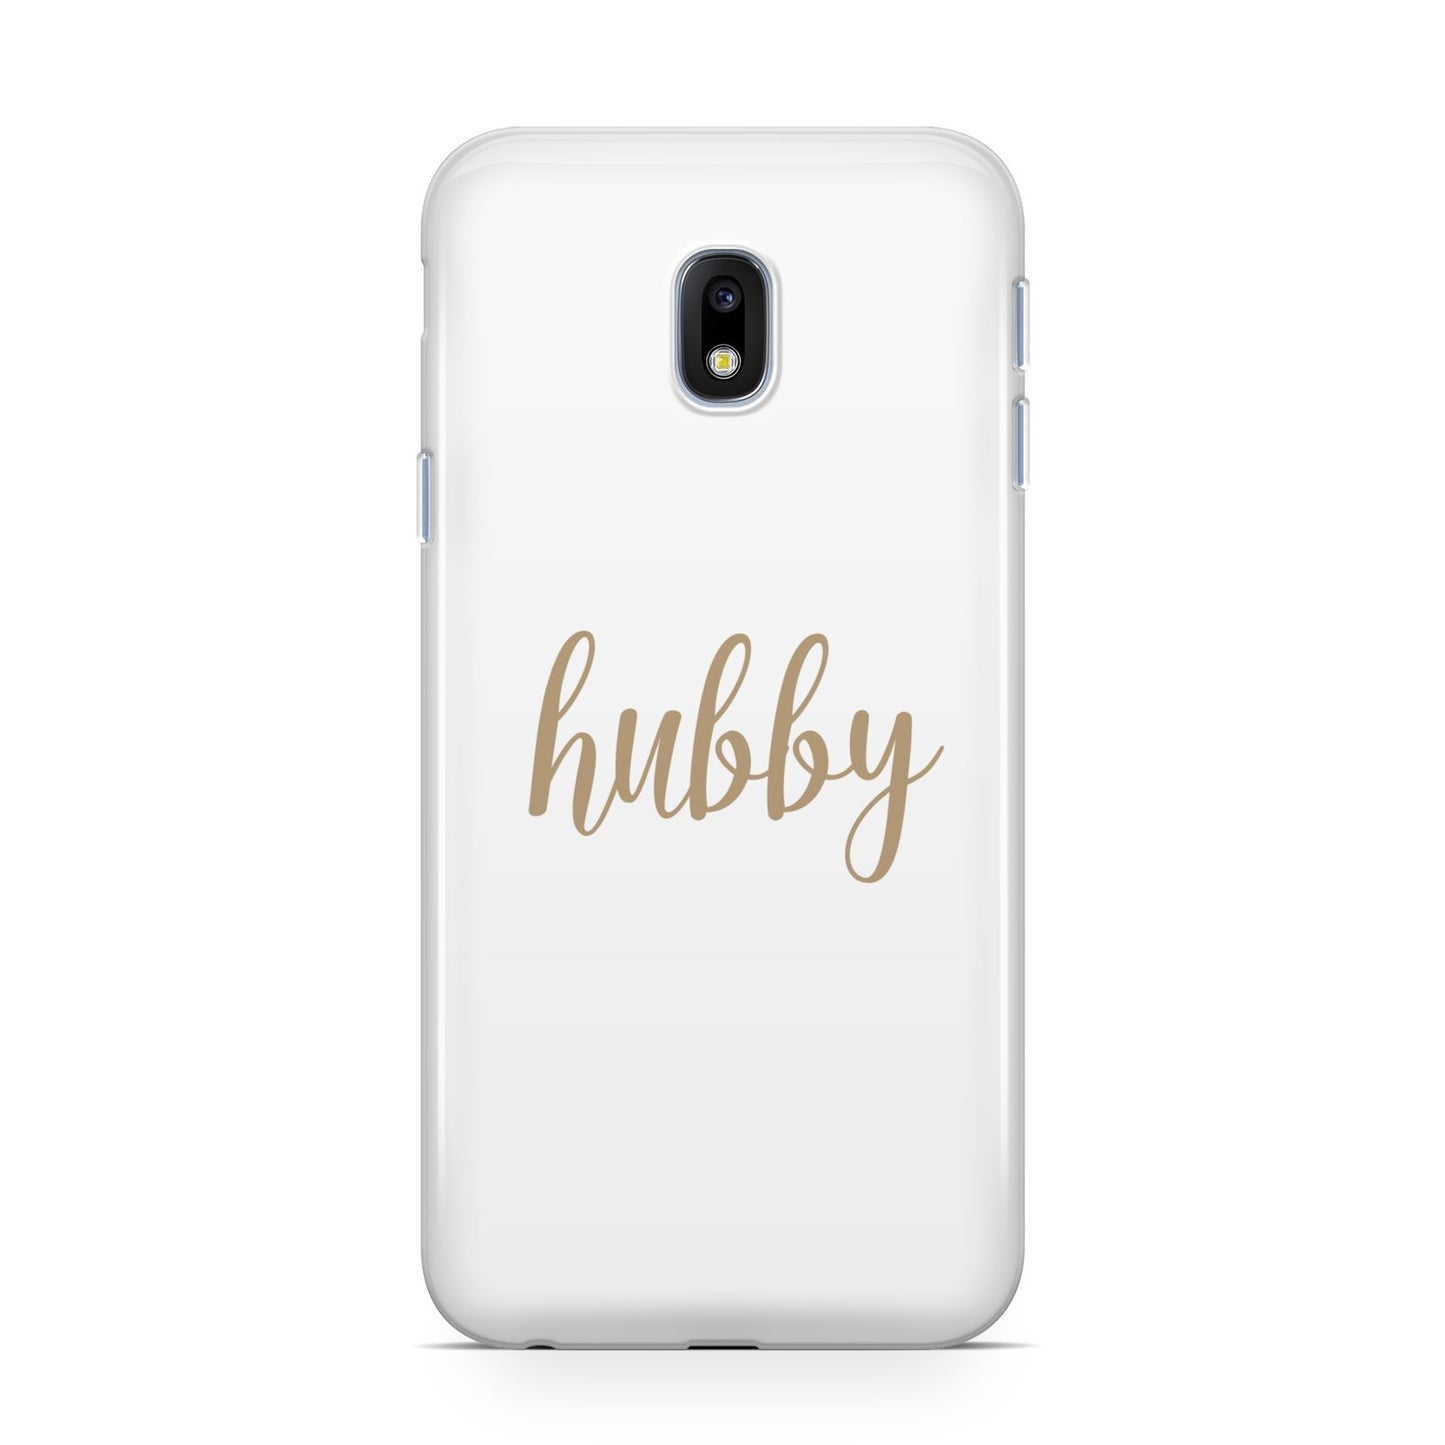 Hubby Samsung Galaxy J3 2017 Case